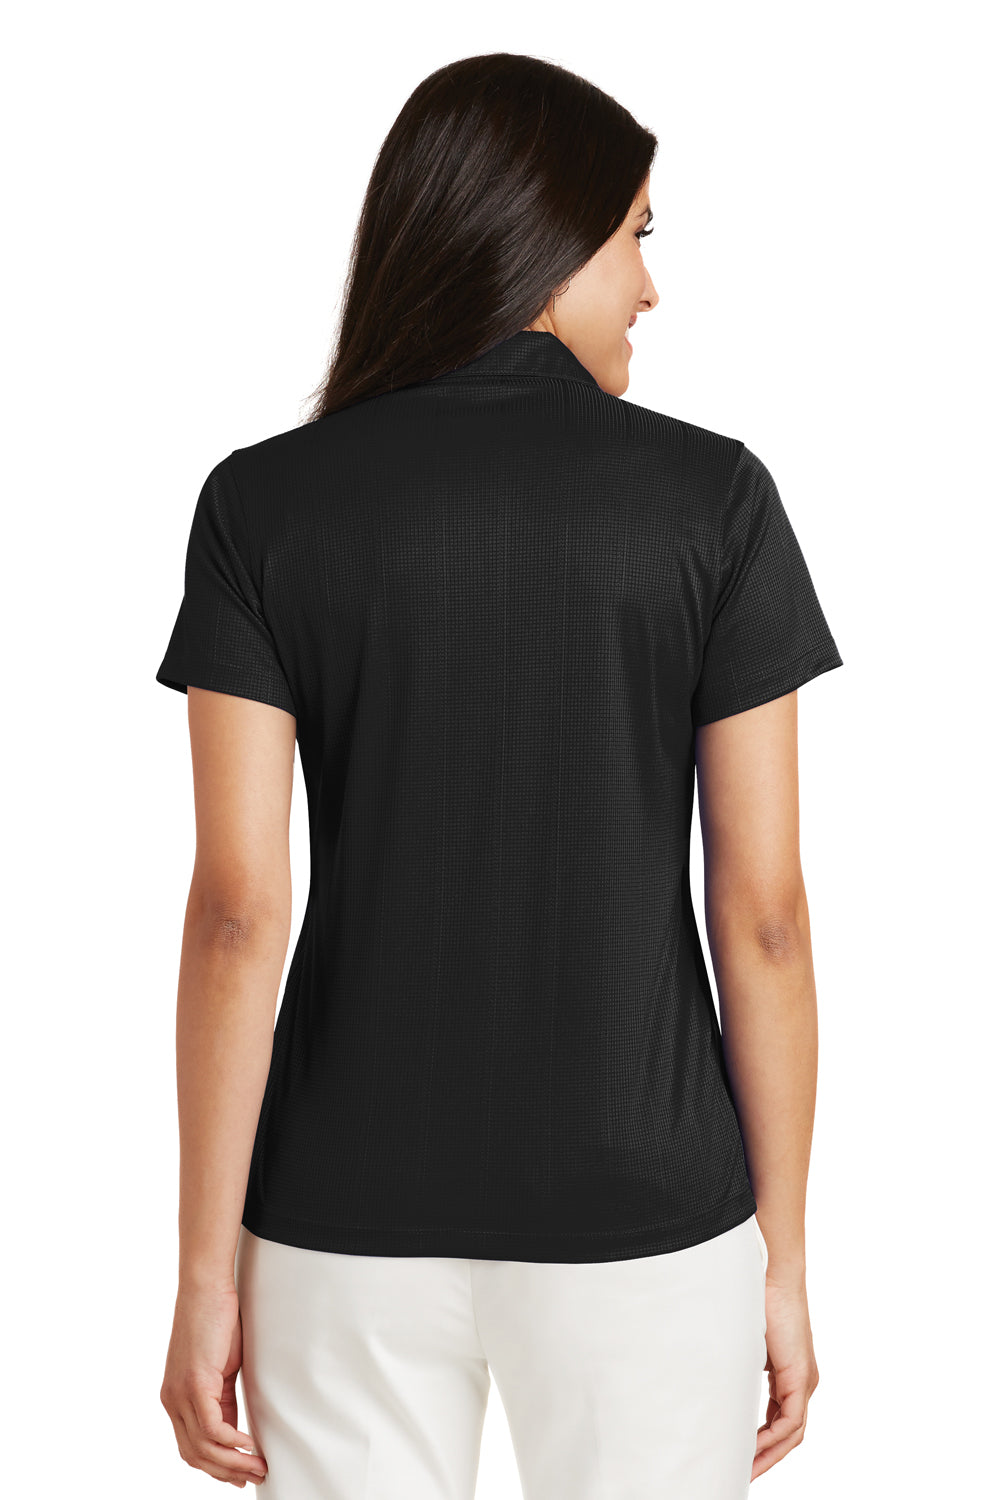 Port Authority L528 Womens Performance Moisture Wicking Short Sleeve Polo Shirt Black Back